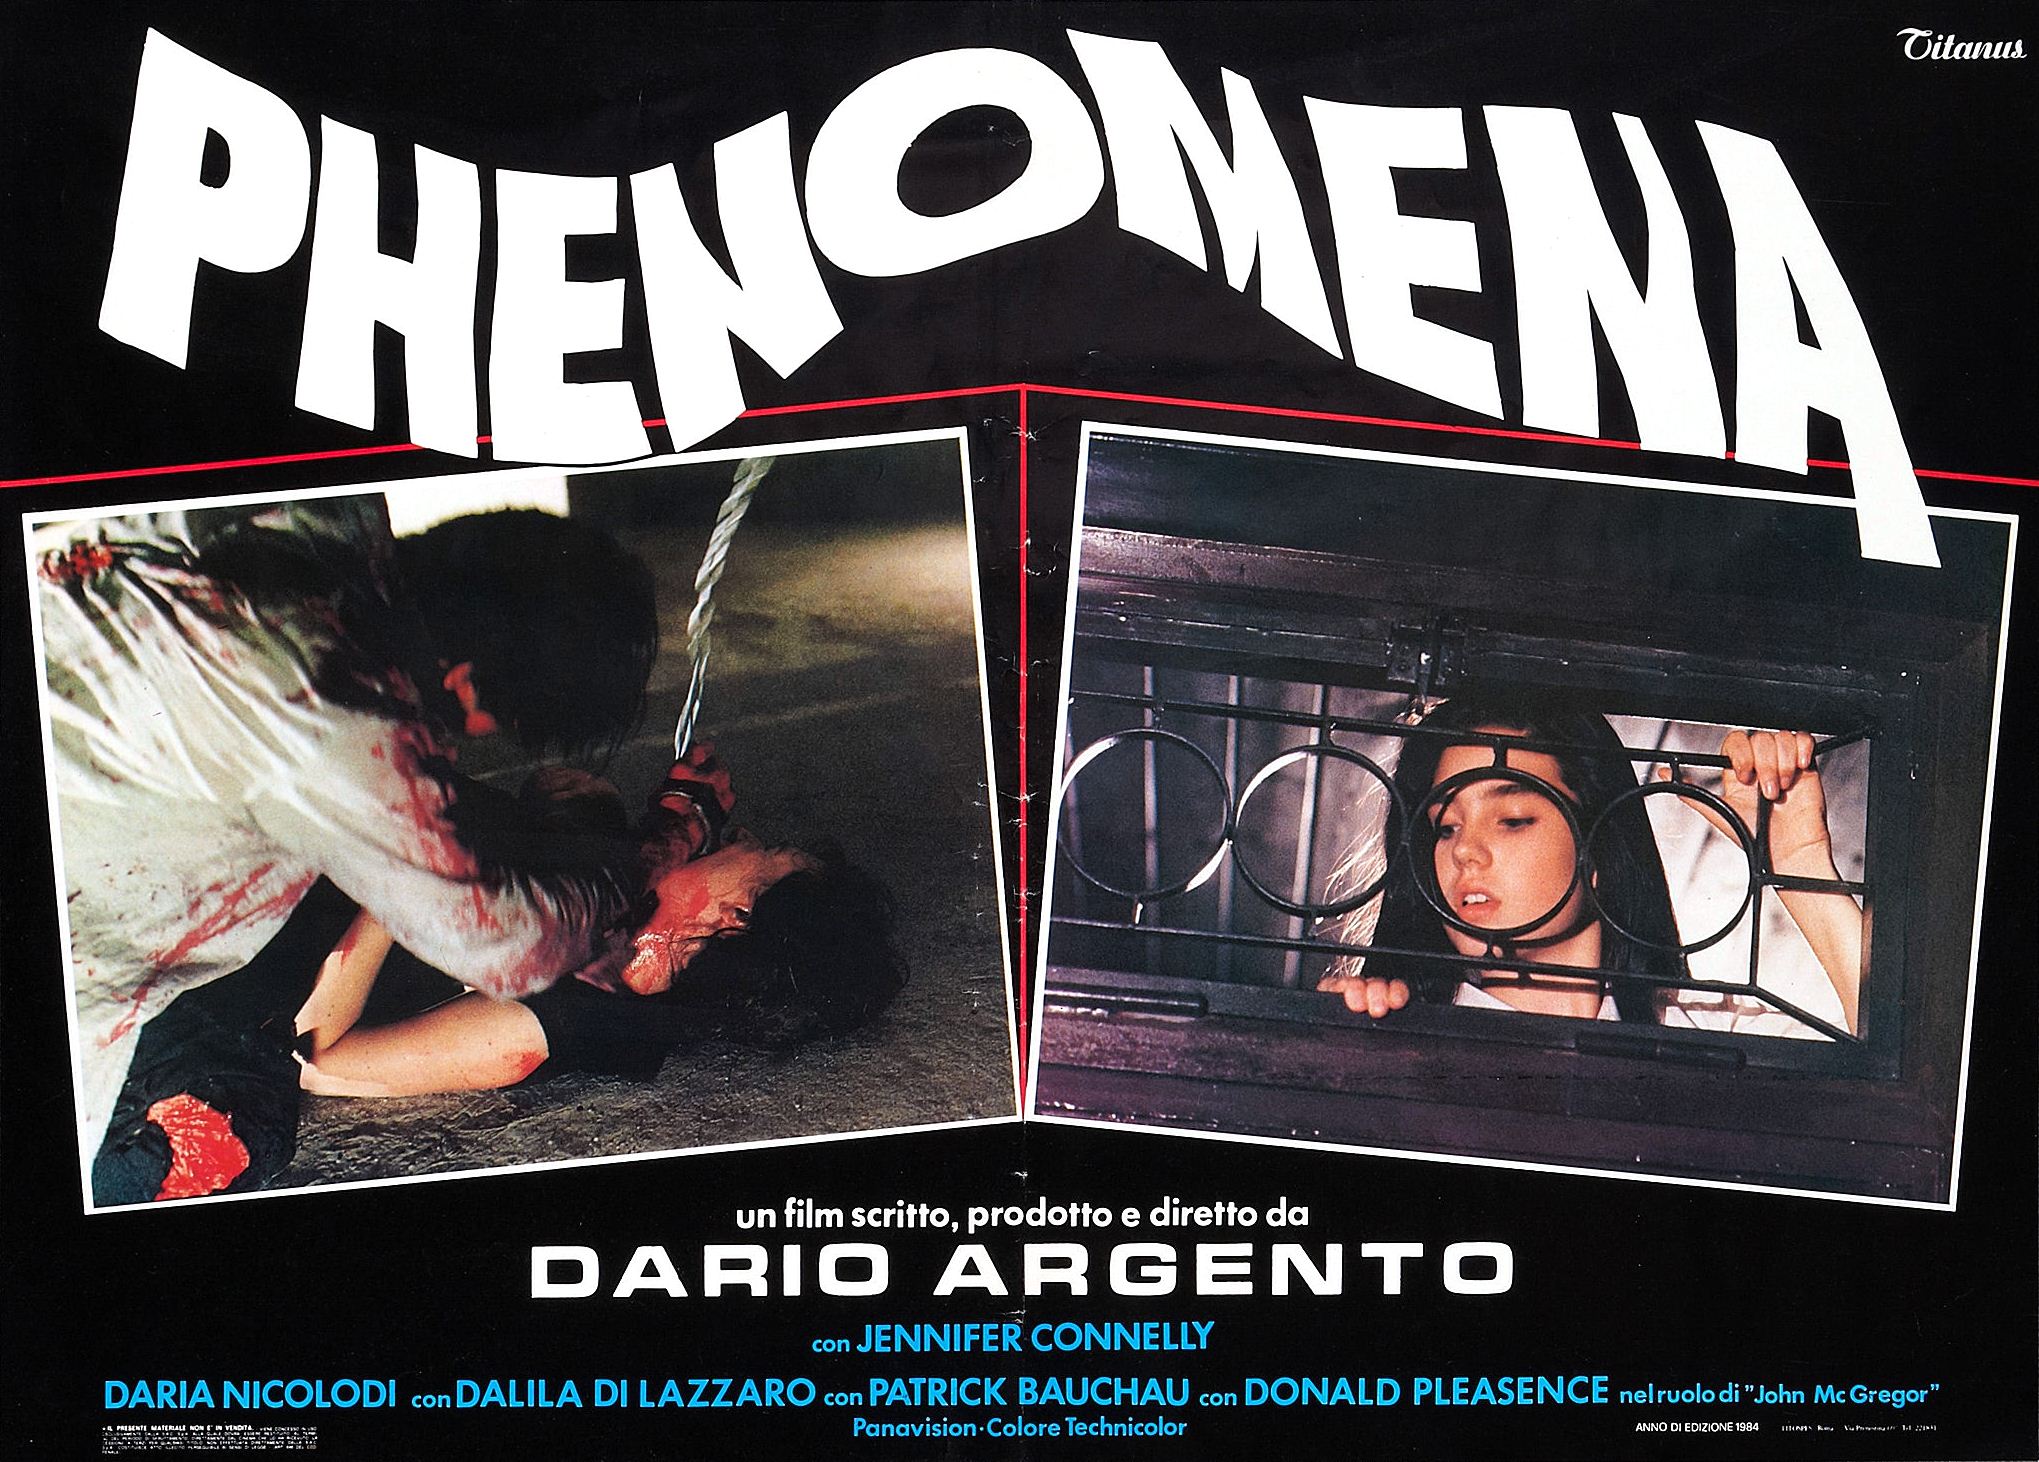 Dario Argento'nun Phenomena Galerisi 2 – phenomena fb 07